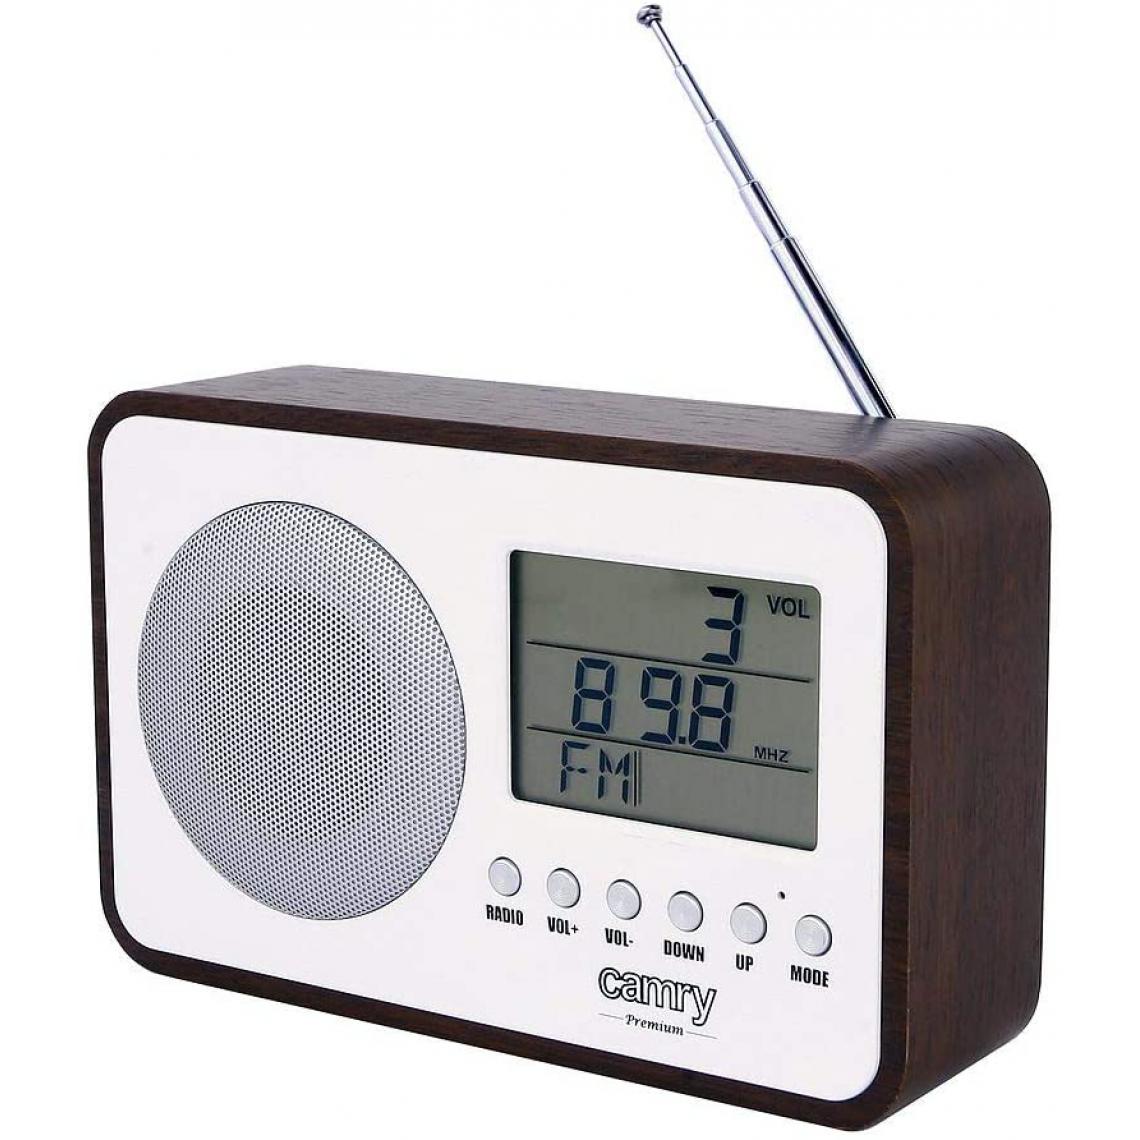 Camry - radio FM portable marron blanc - Radio